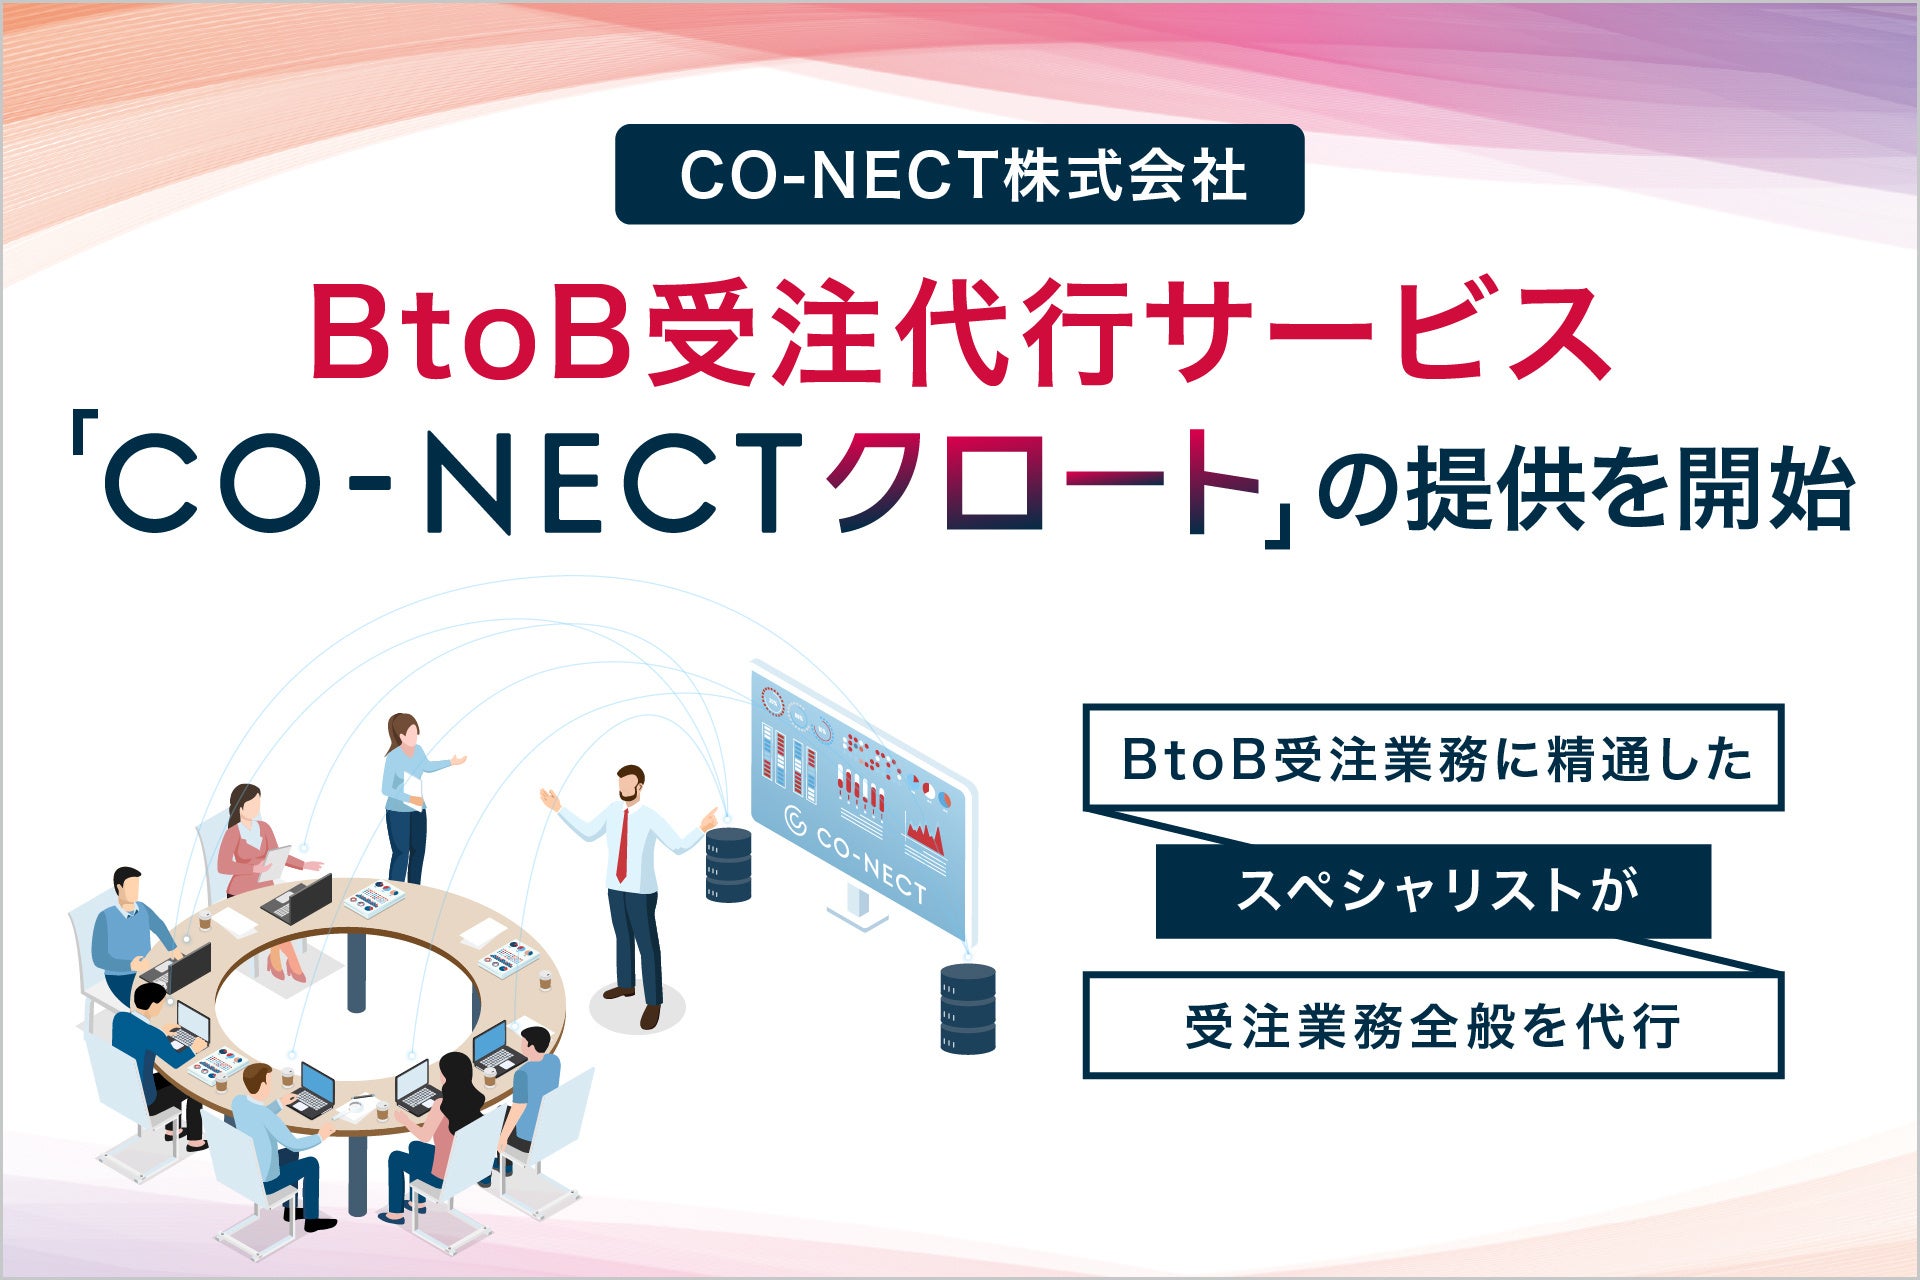 CO-NECT株式会社、BtoB受注代行サービス「CO-NECTクロート」を提供開始